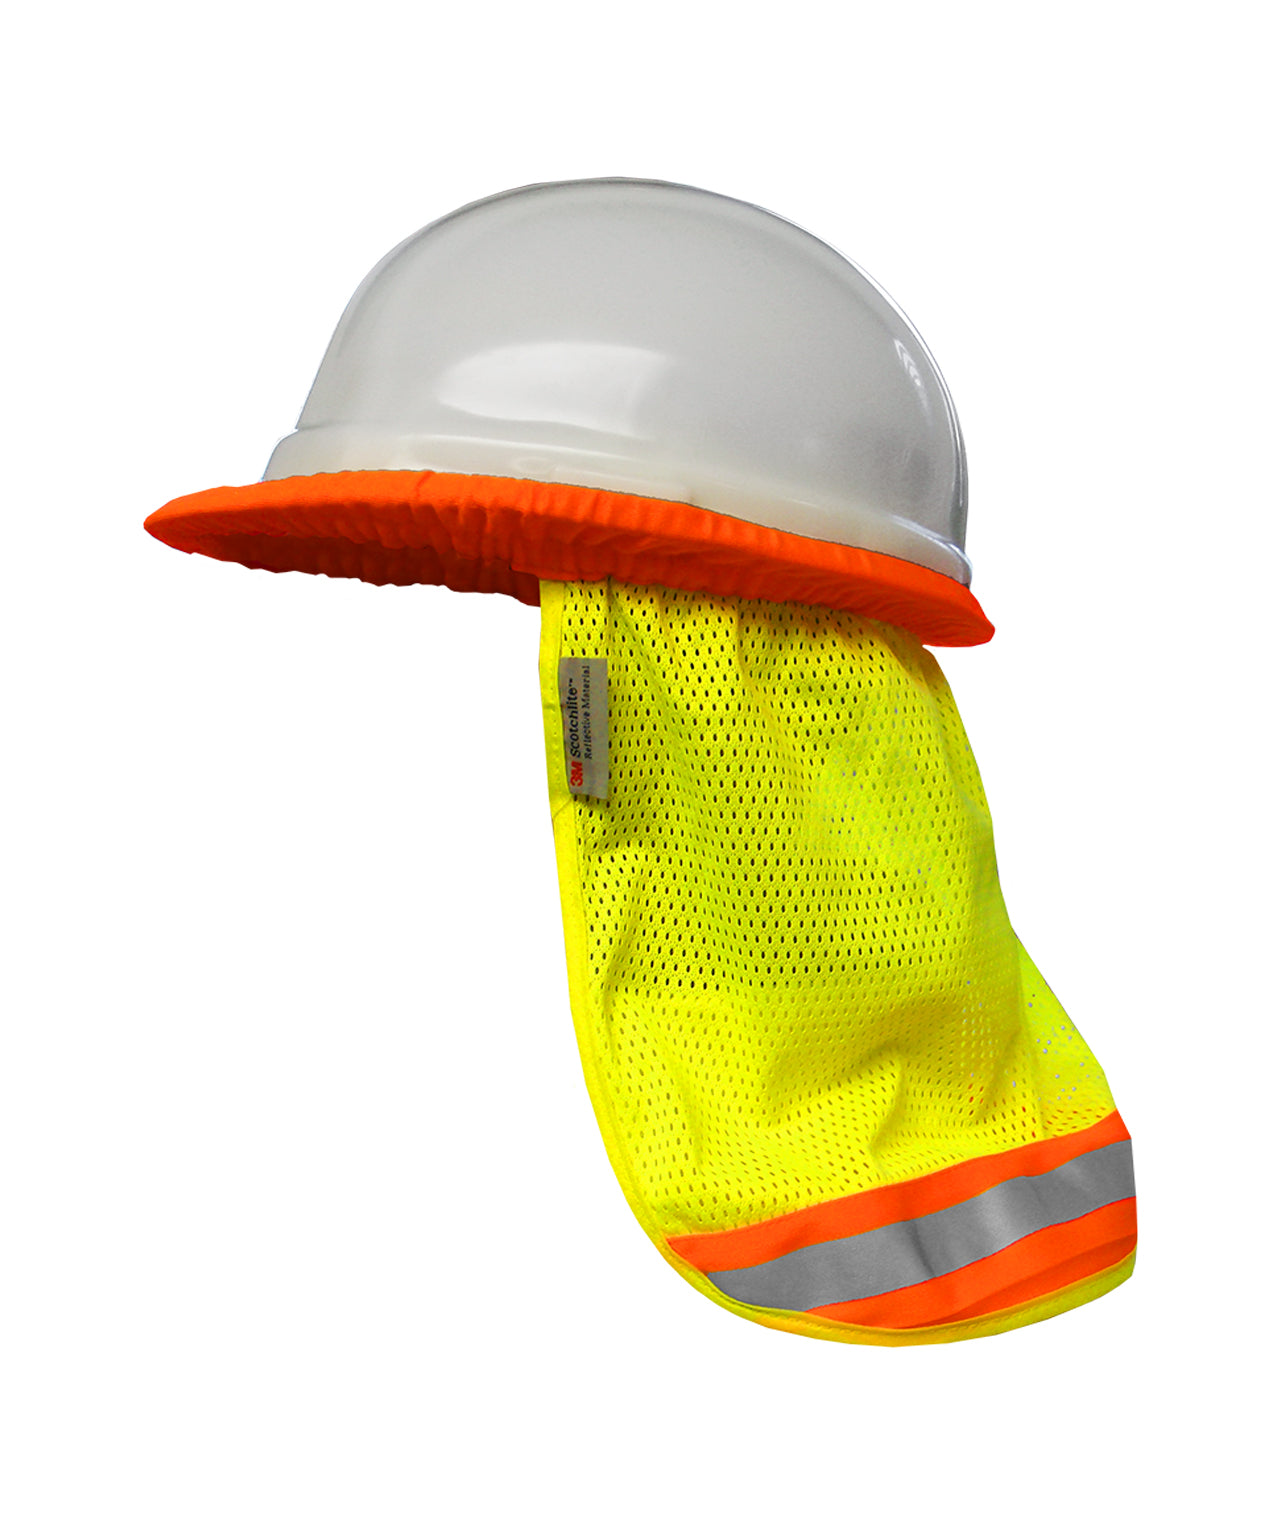 809STLM Safety Sun Shade: Hi-Vis Neck Shade for Hard Hats: Reflective